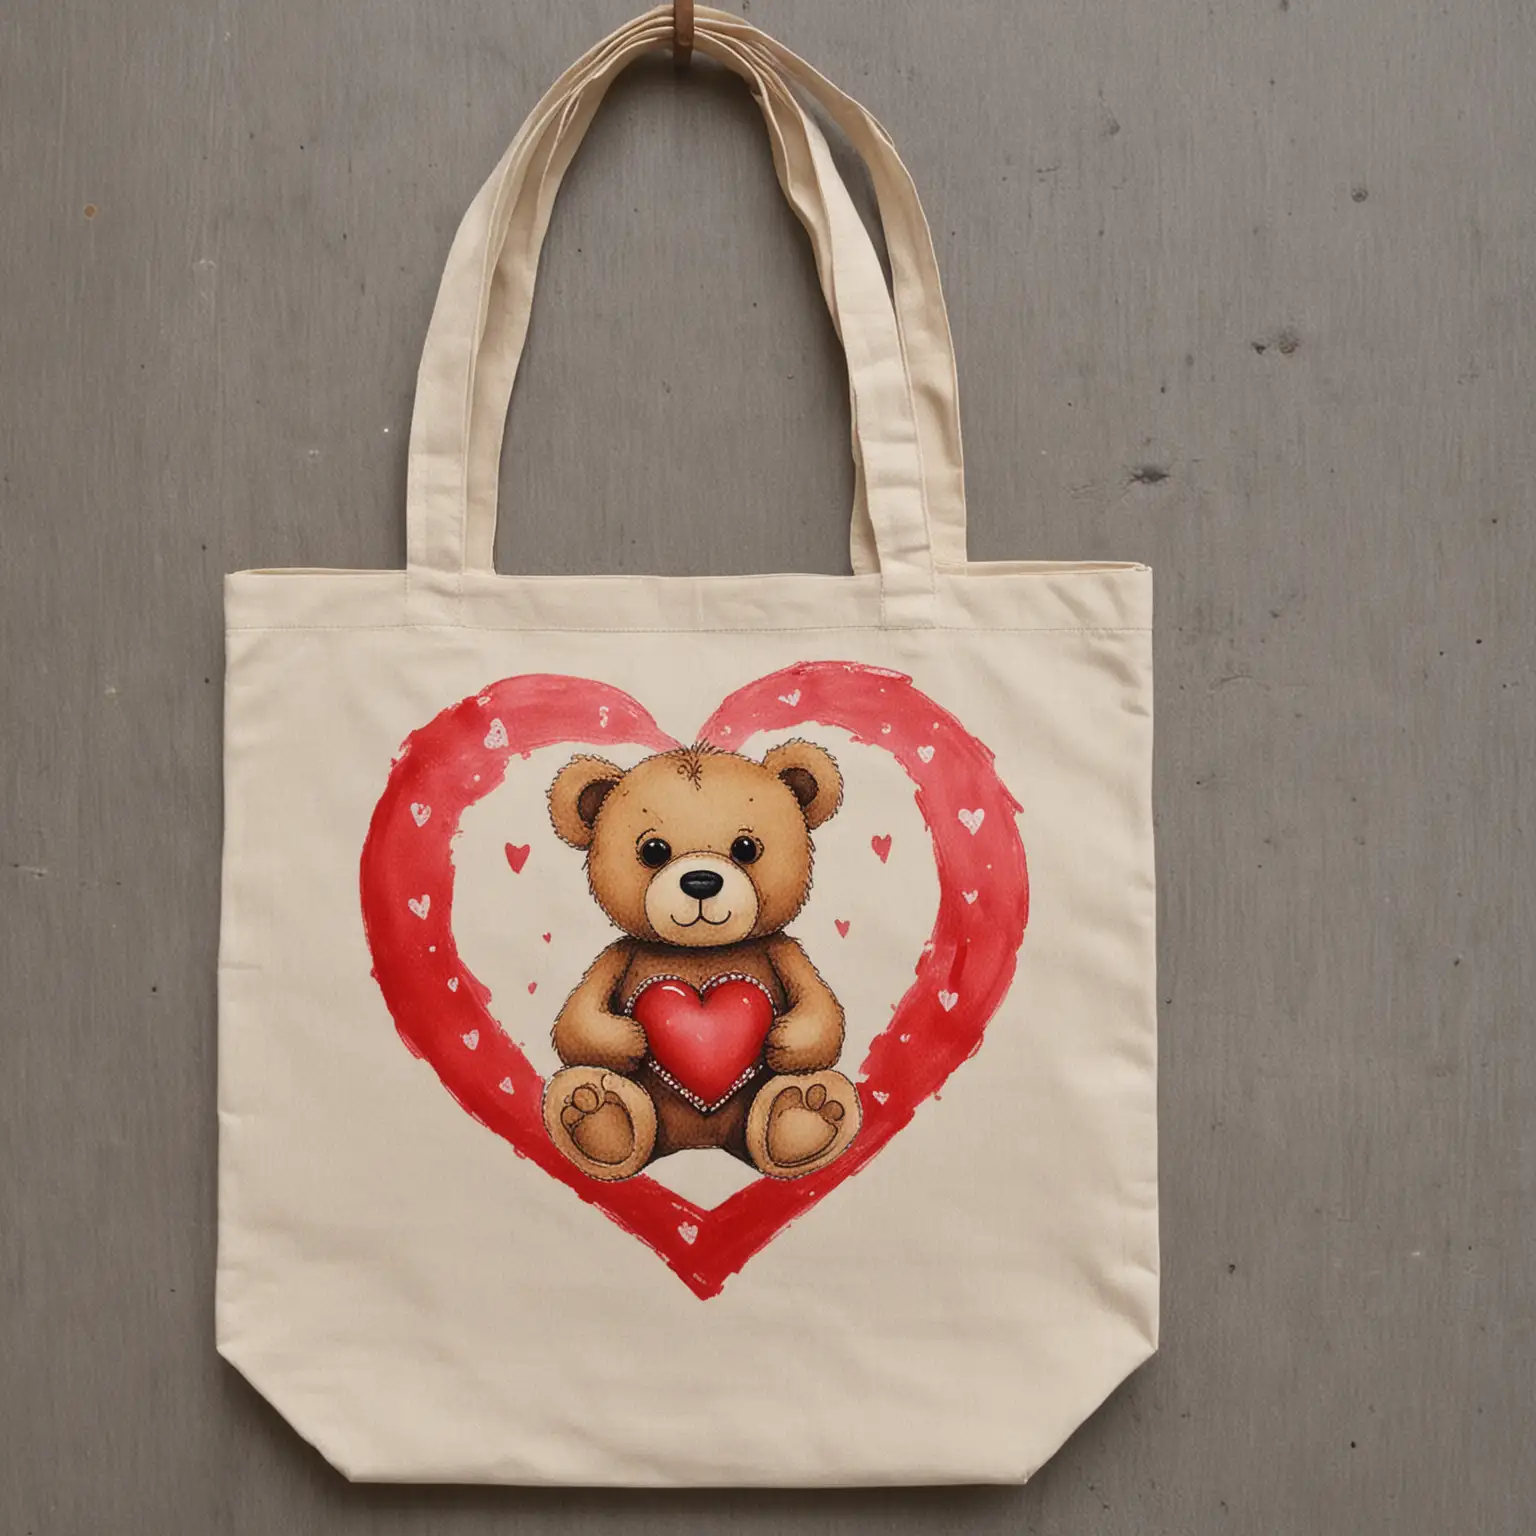 tote bag, hand painted, heart, teddy bear